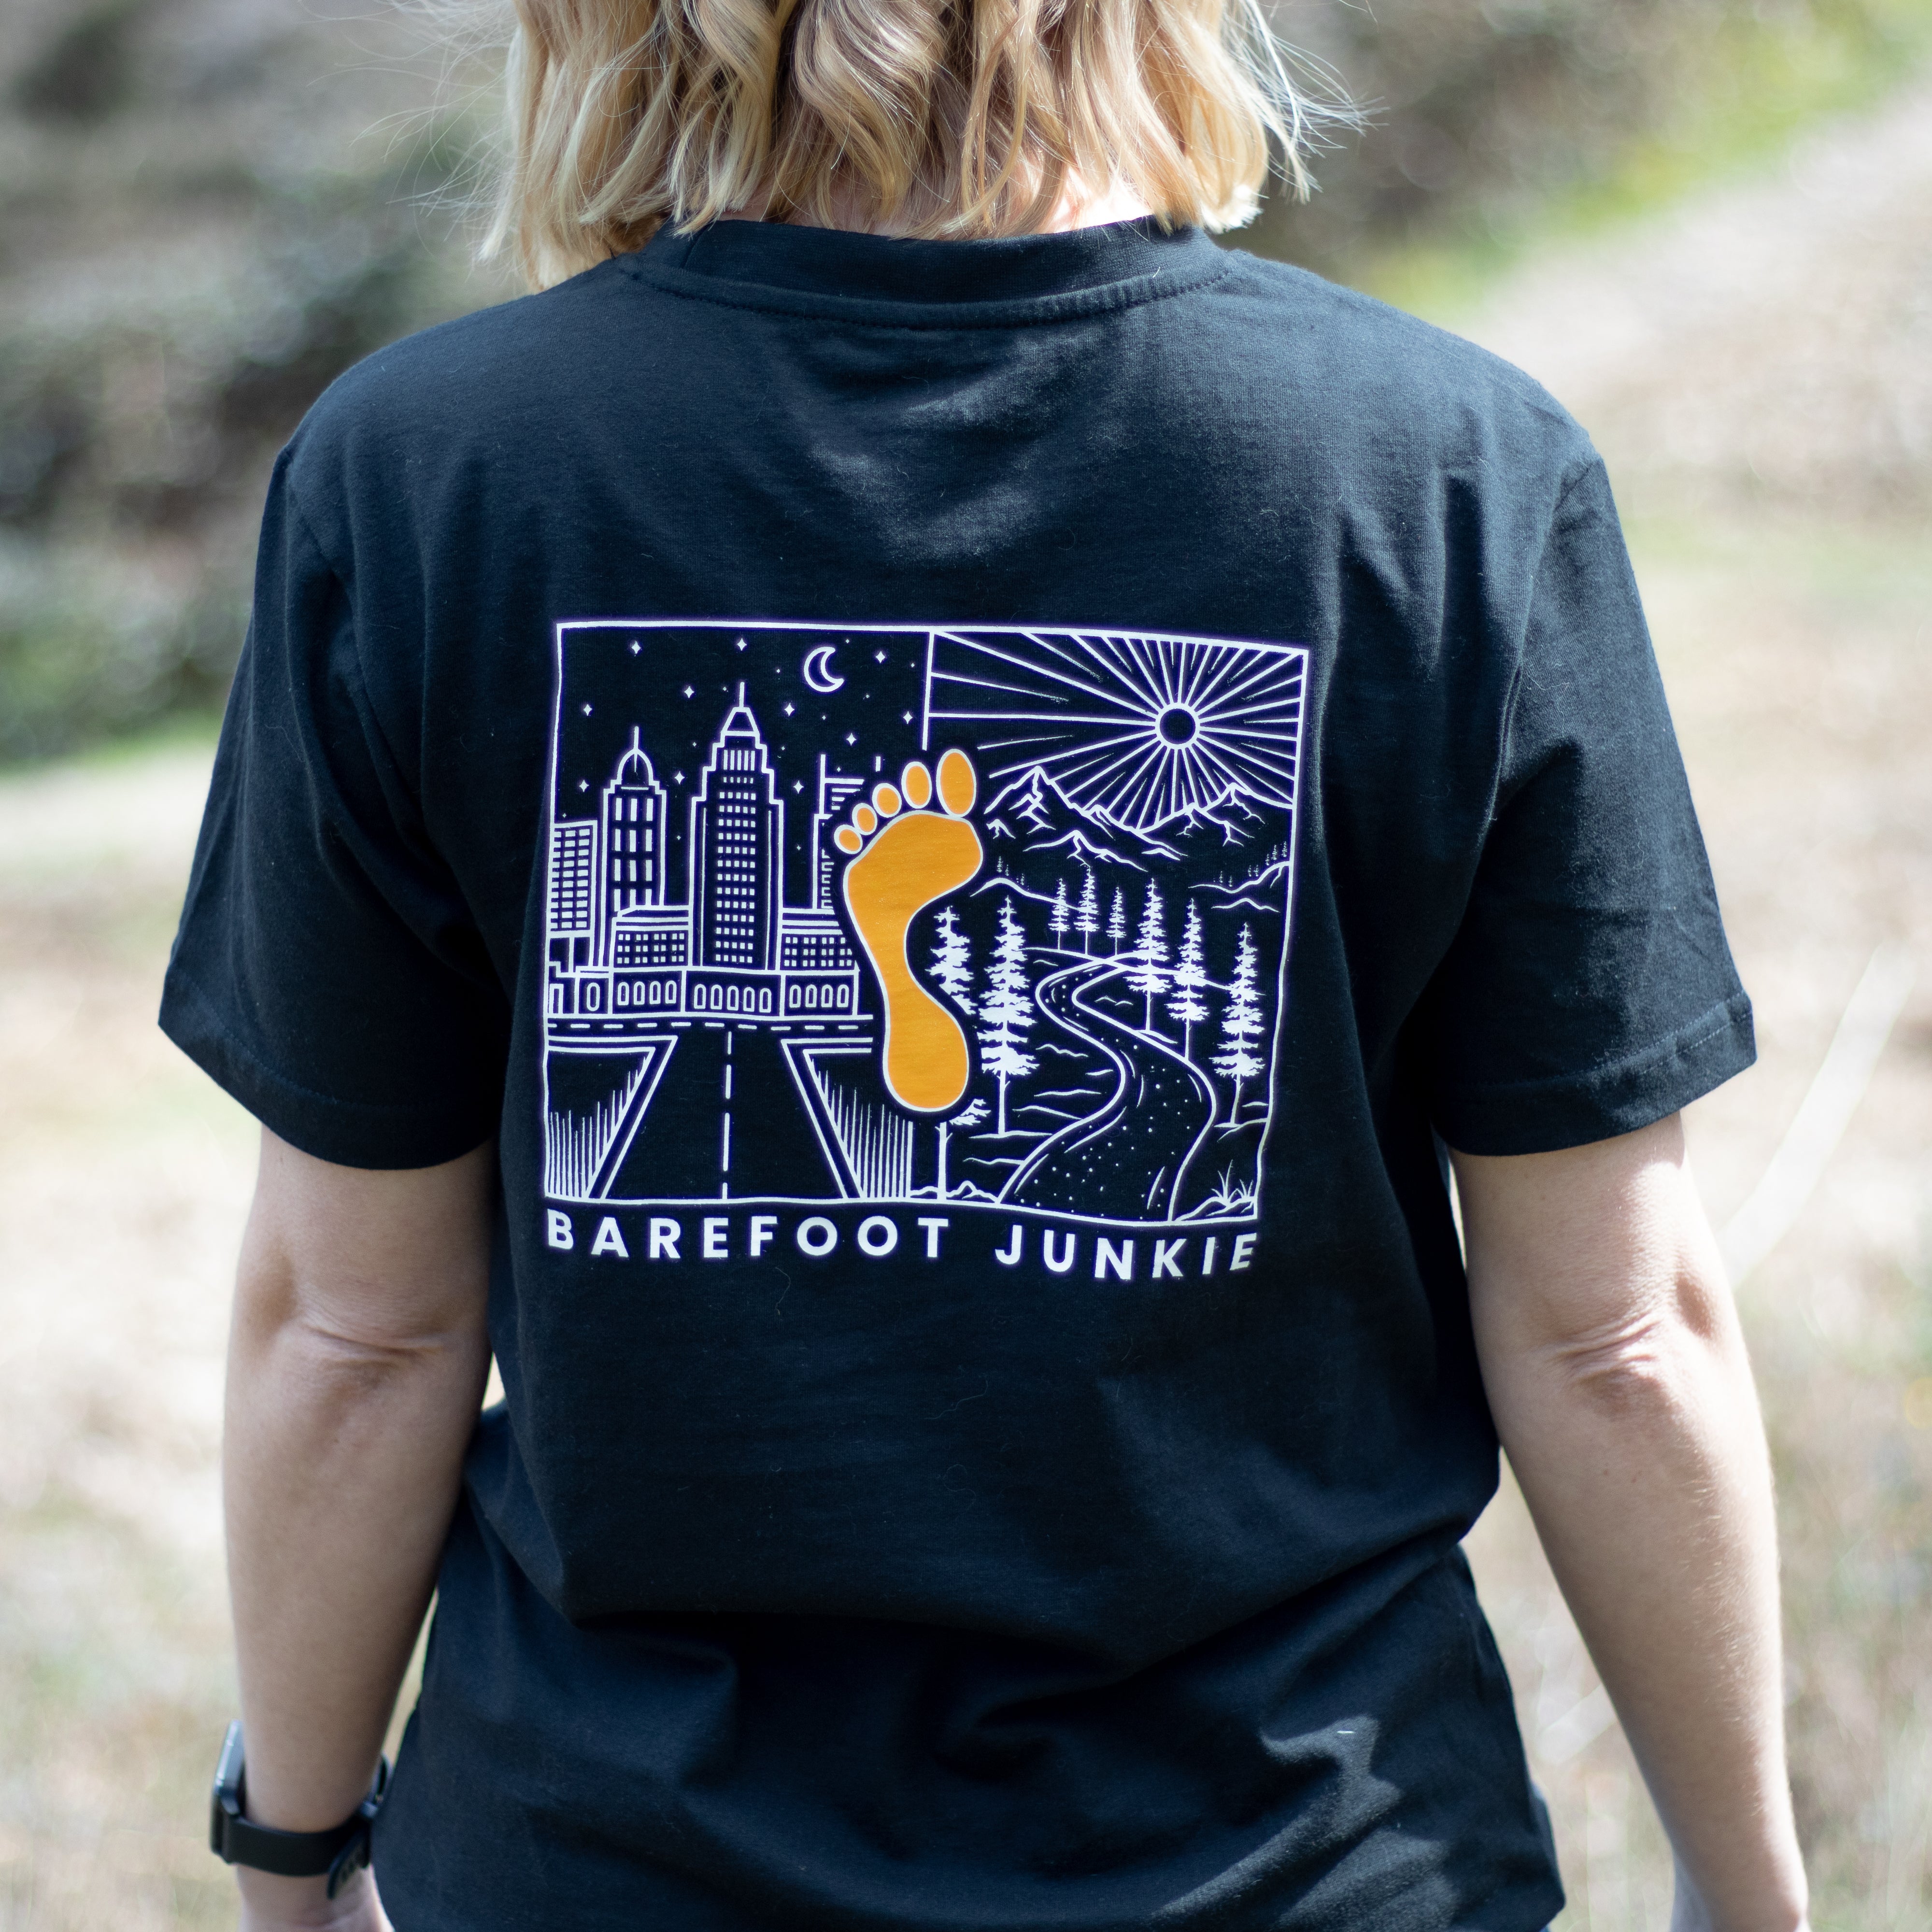 Barefoot Junkie - Barefoot Junkie Night & Day T-Shirt Black Unisex Fit - Barefoot Junkie - T-Shirt